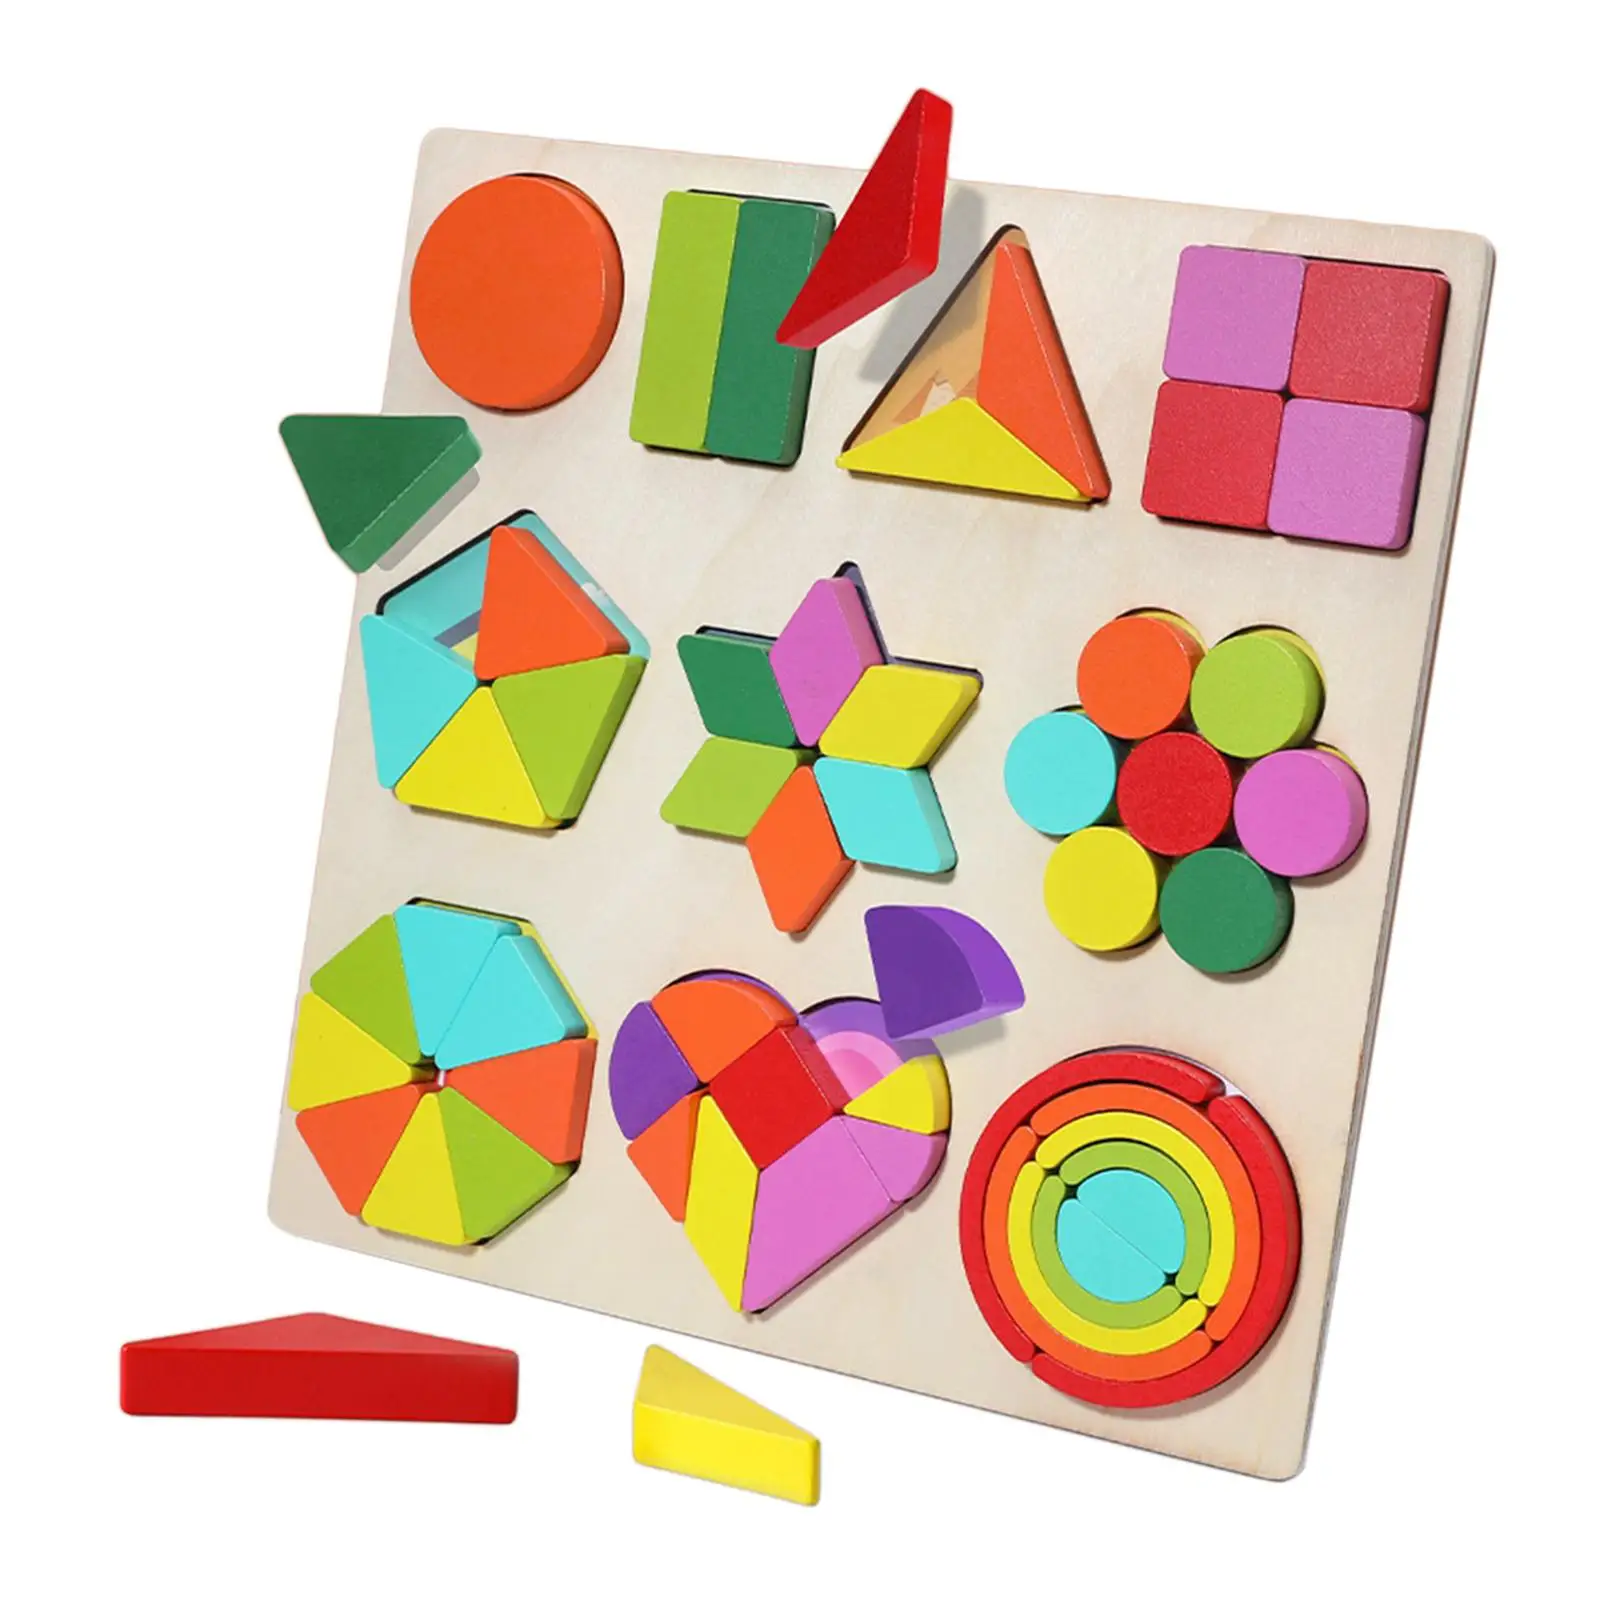 Wooden Wooden Puzzle Educational Developmental Toys Logical Skills Geometric Manipulative Board Game  Jigsaw Girls